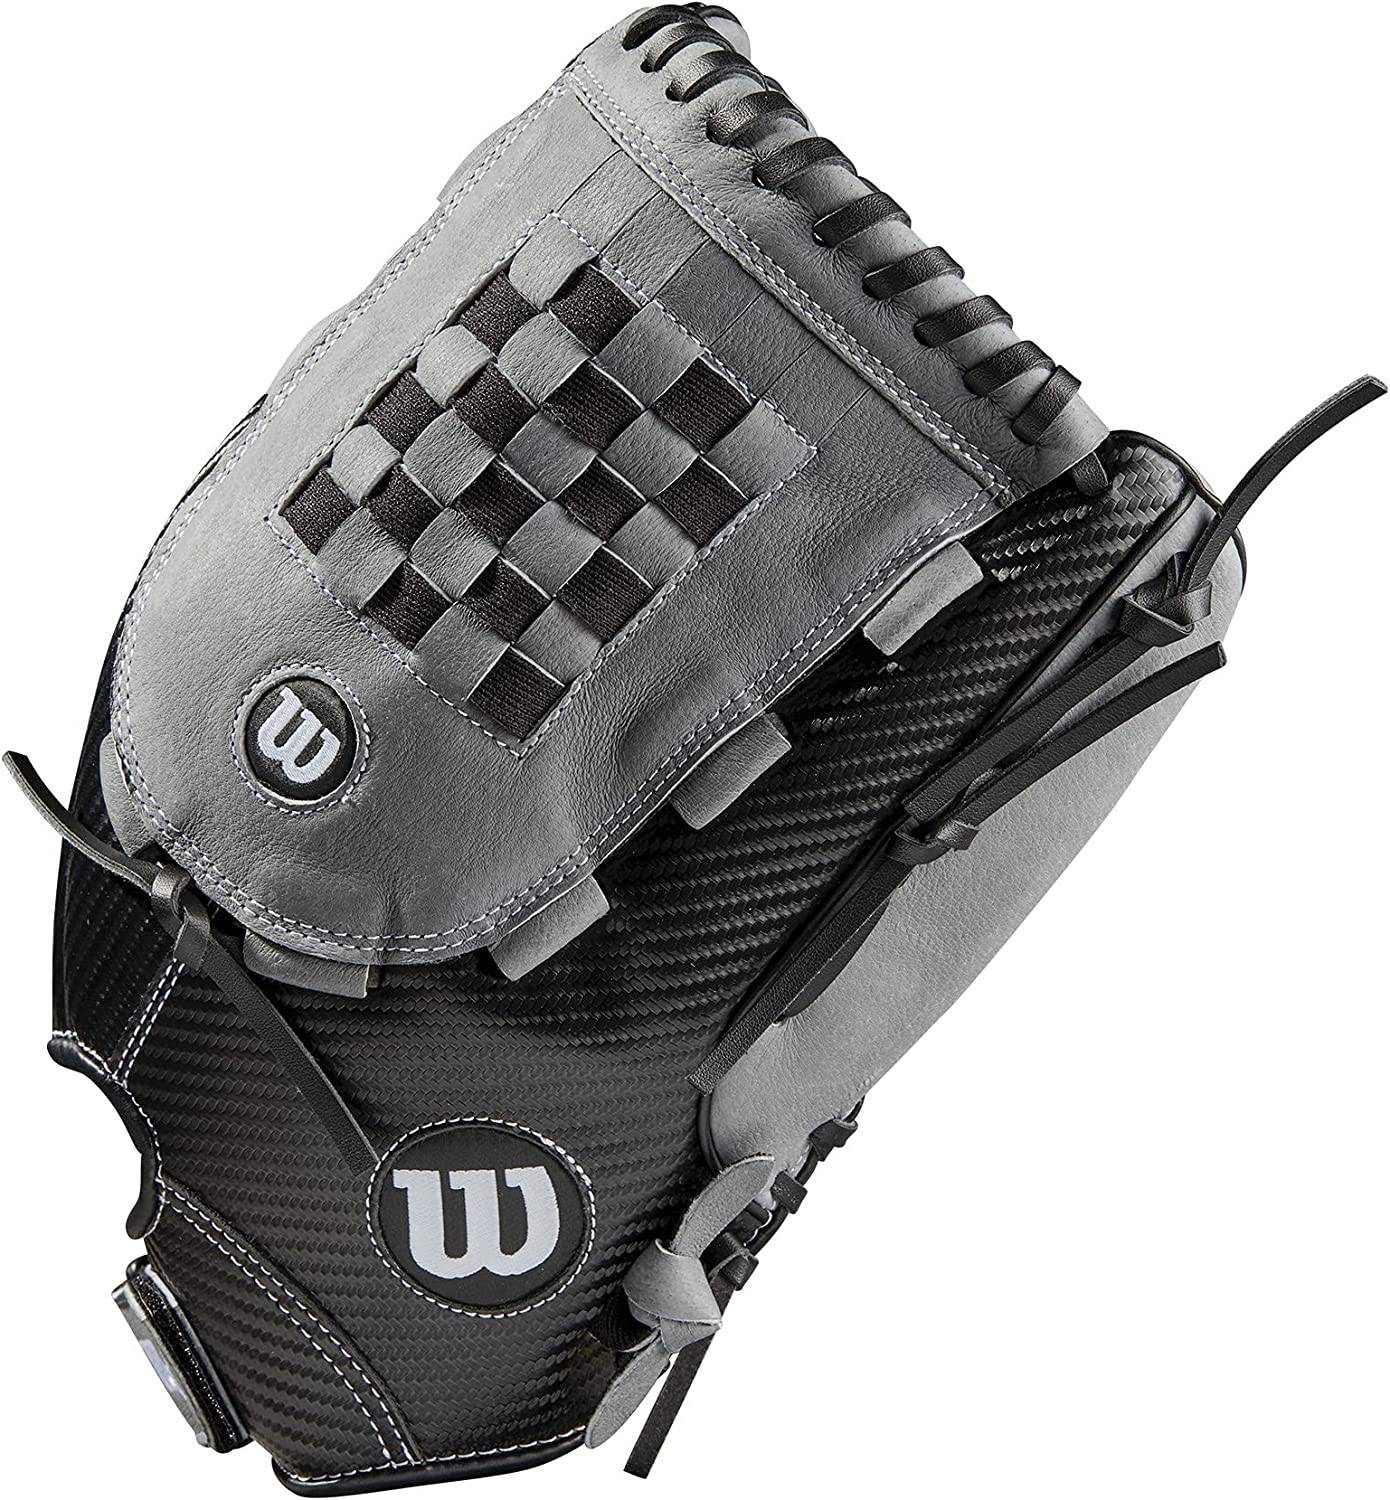 Wilson A360 Adult Slow Pitch Softball Glove